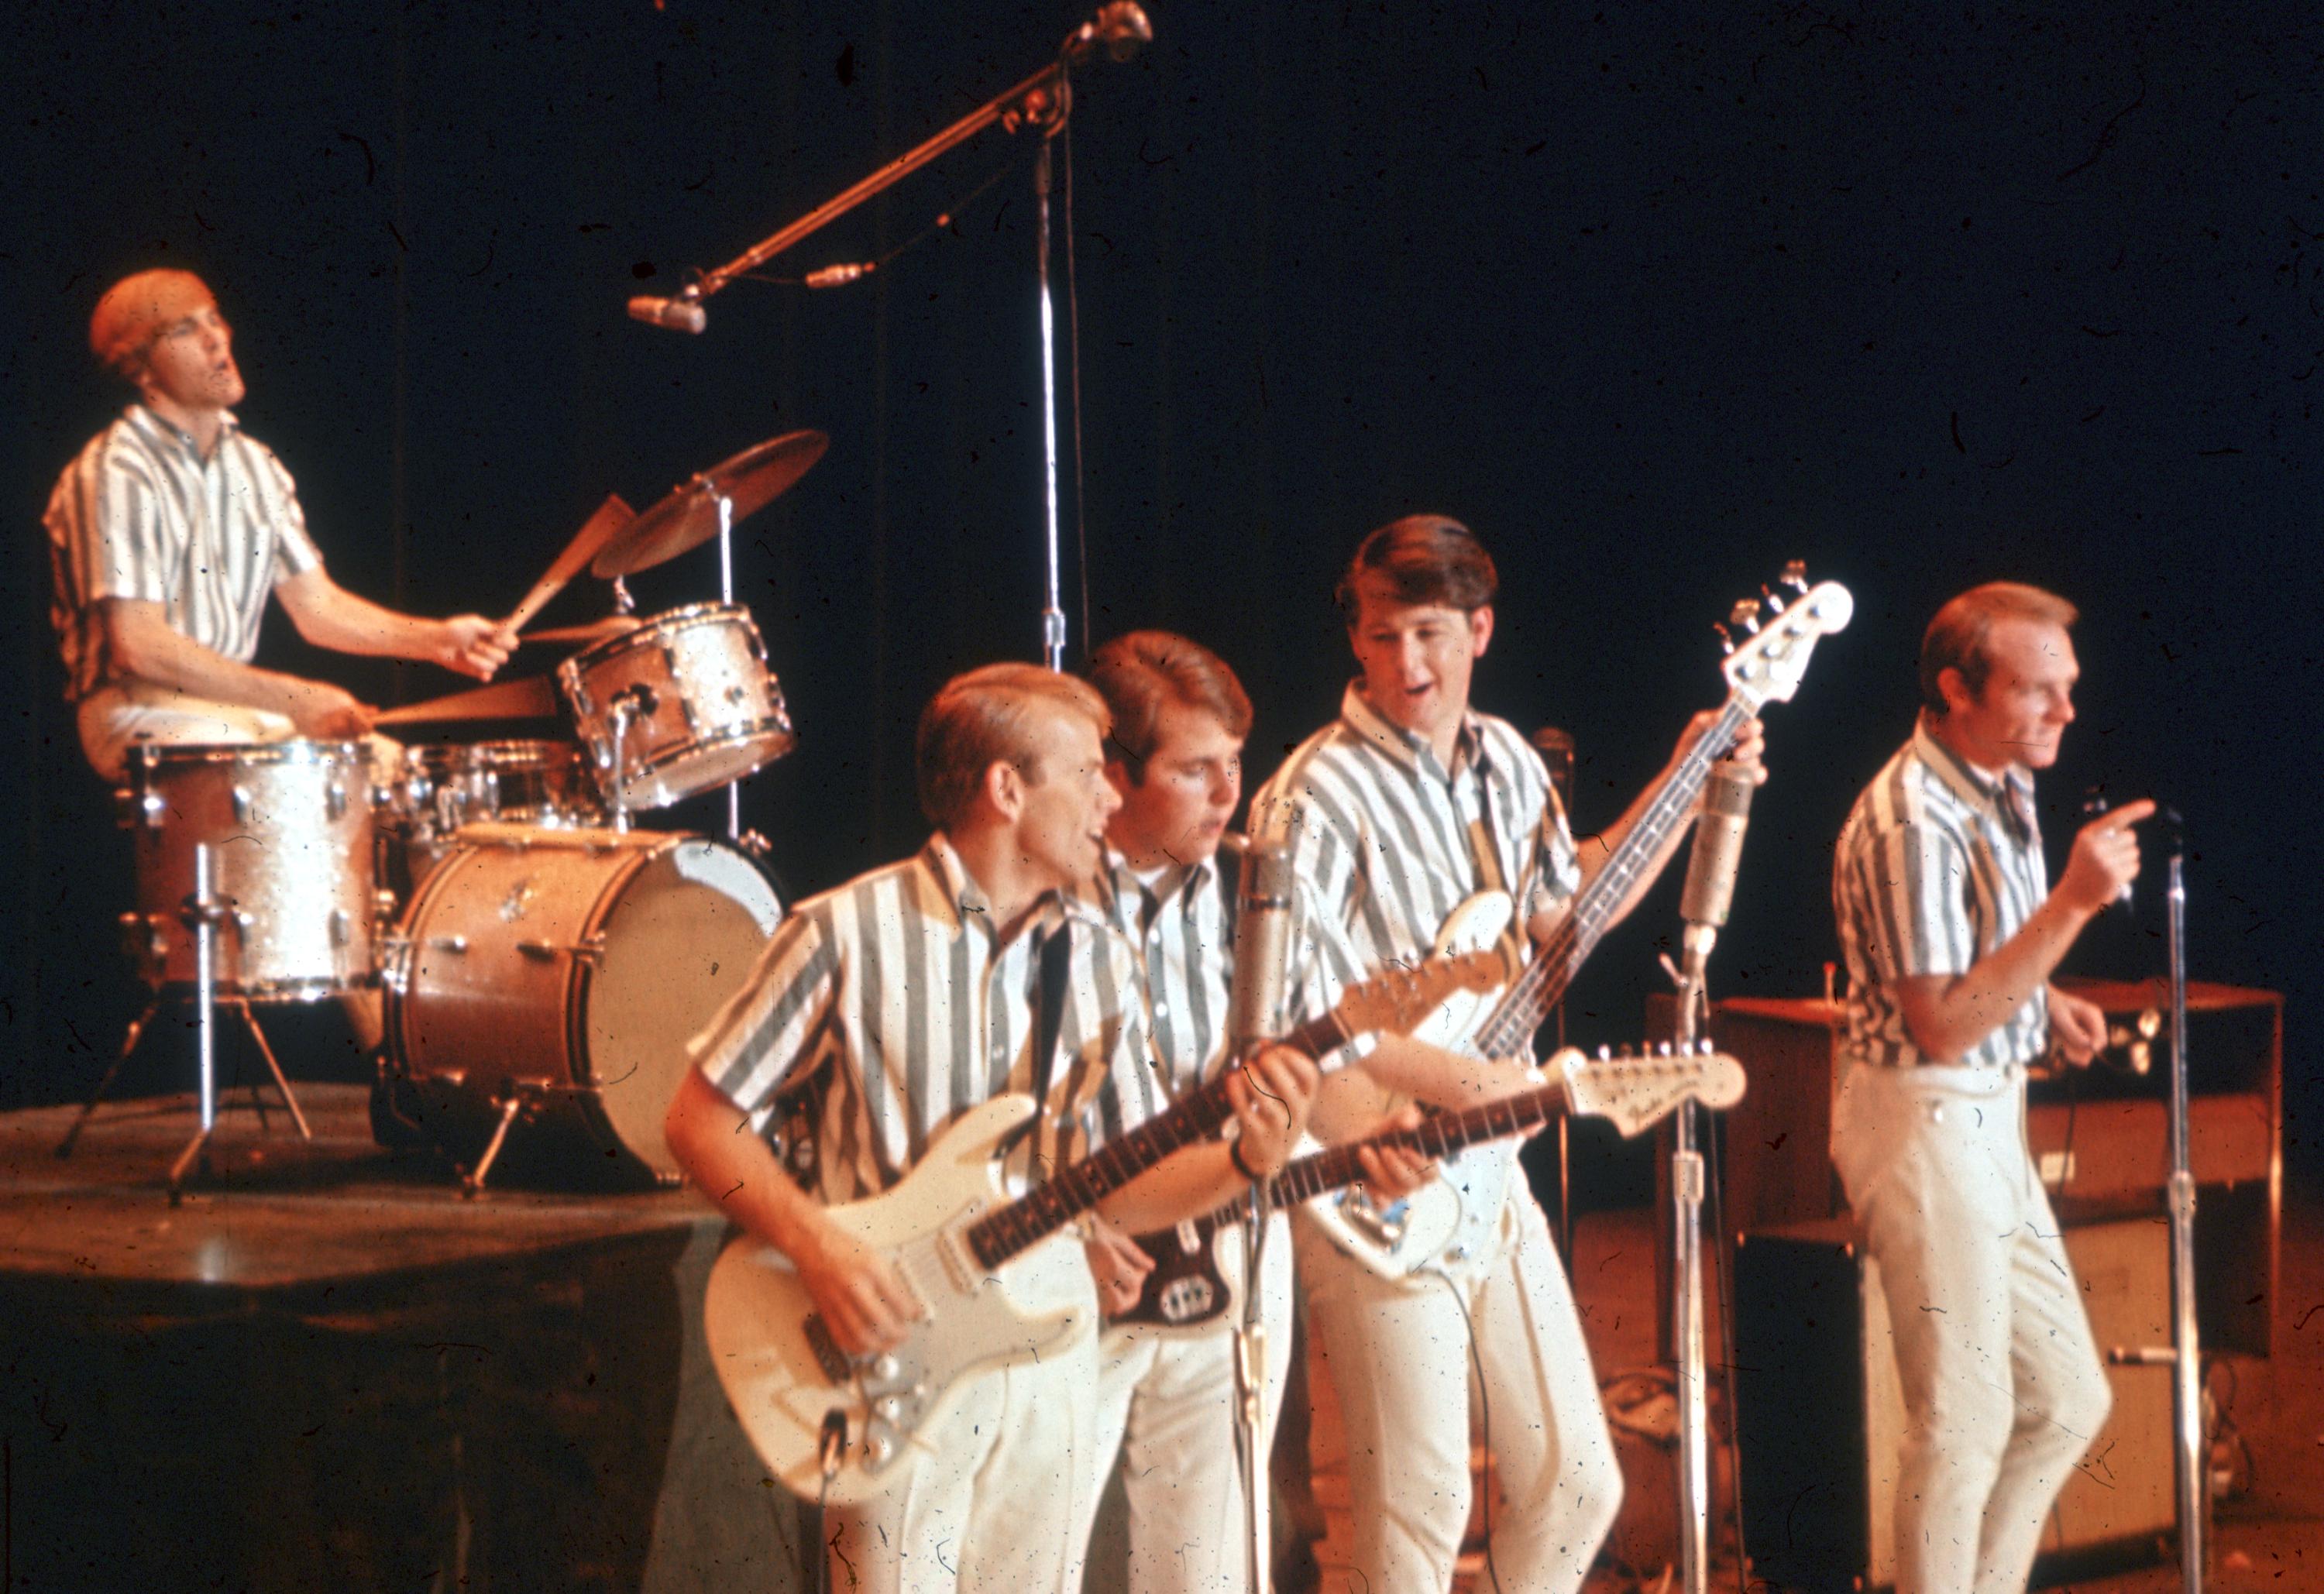 Beach Boys Perform In Striped Shirts